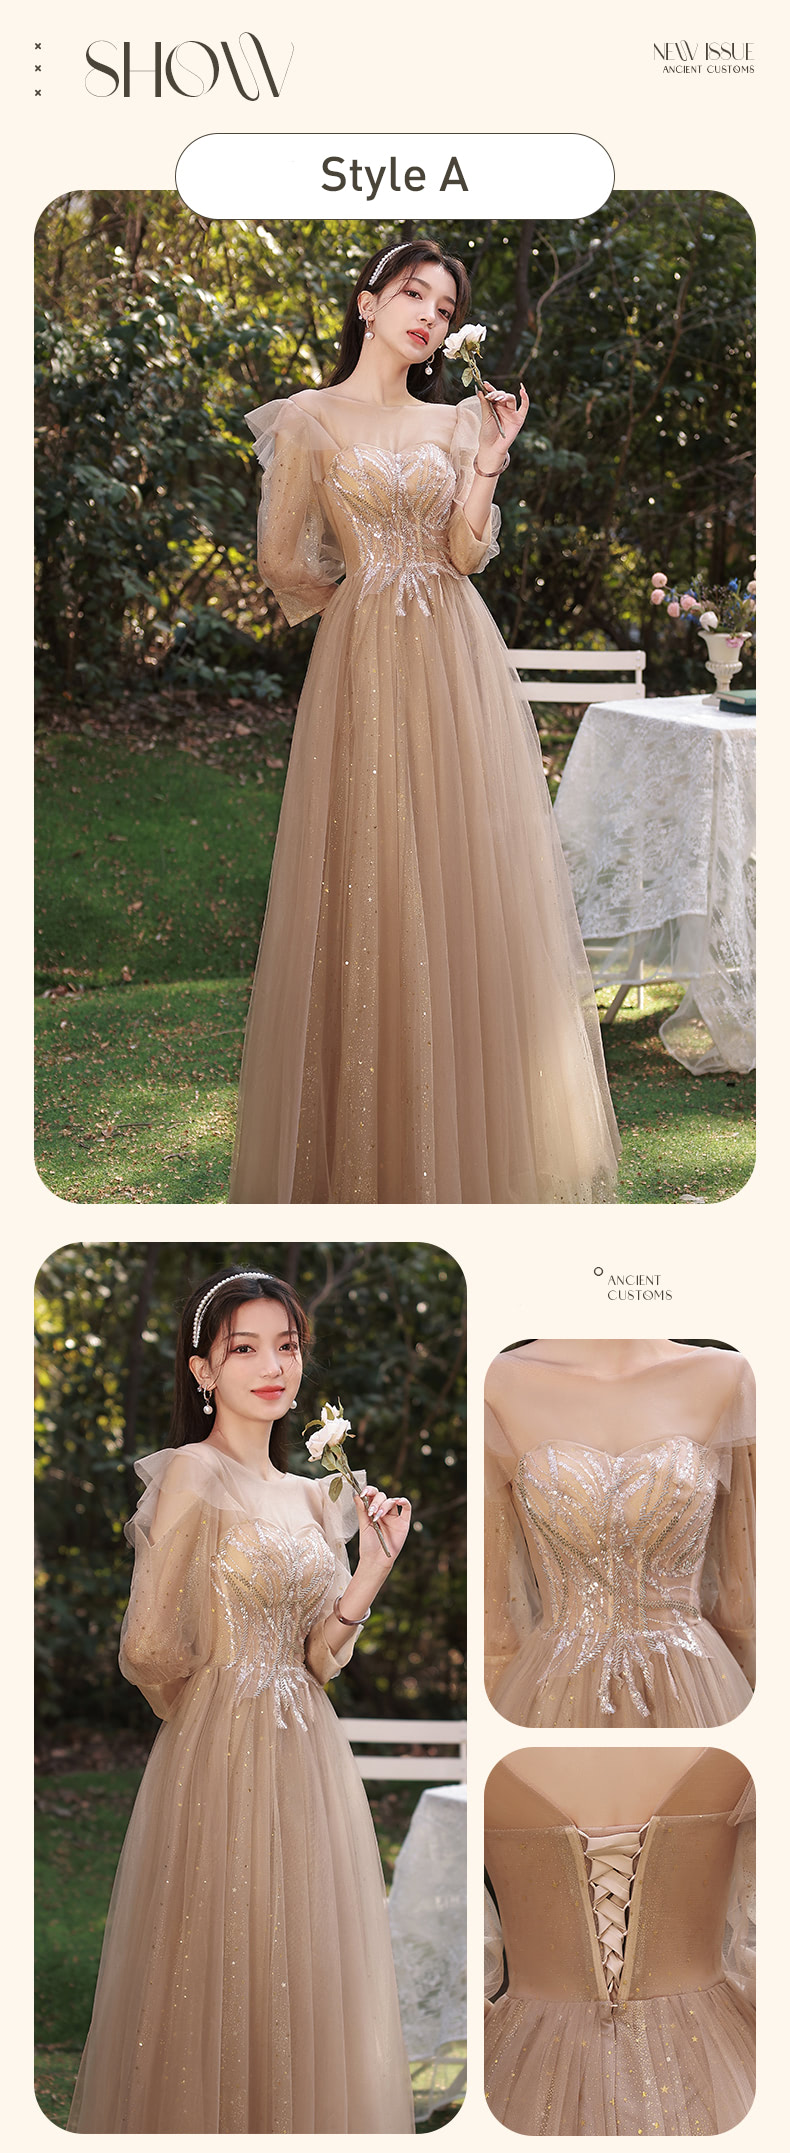 Chiffon-Floor-Length-Bridesmaids-Wedding-Prom-Dress-Ball-Gown17.jpg